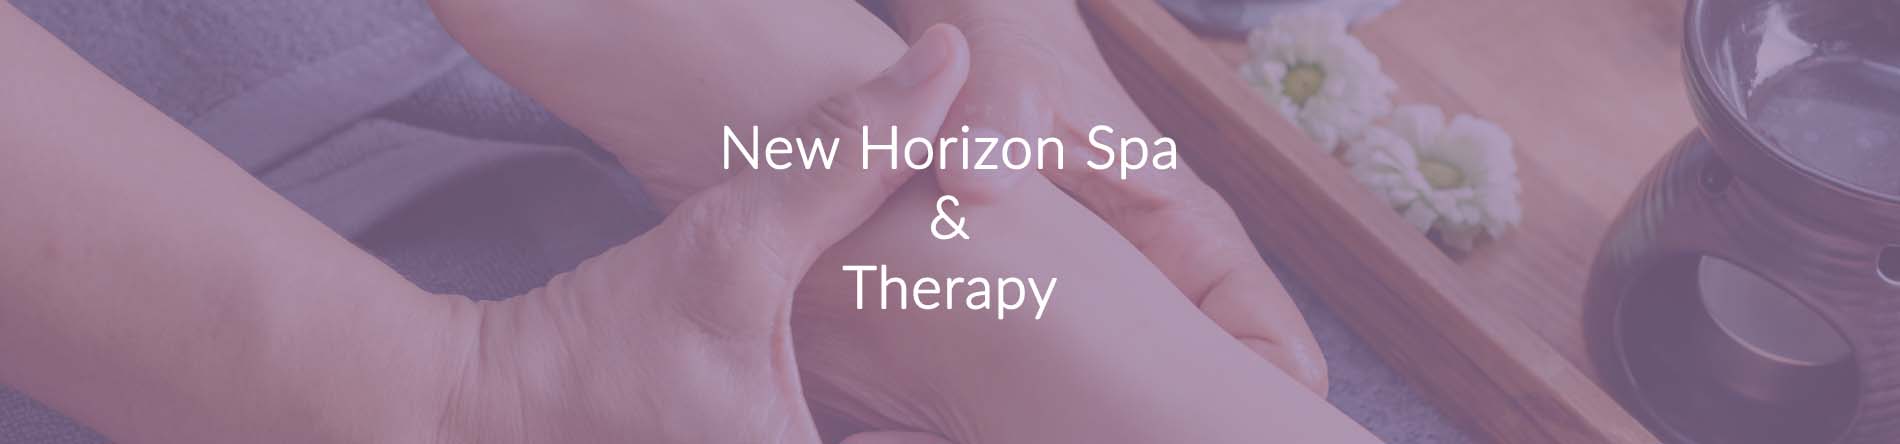 New Horizon Spa & Therapy